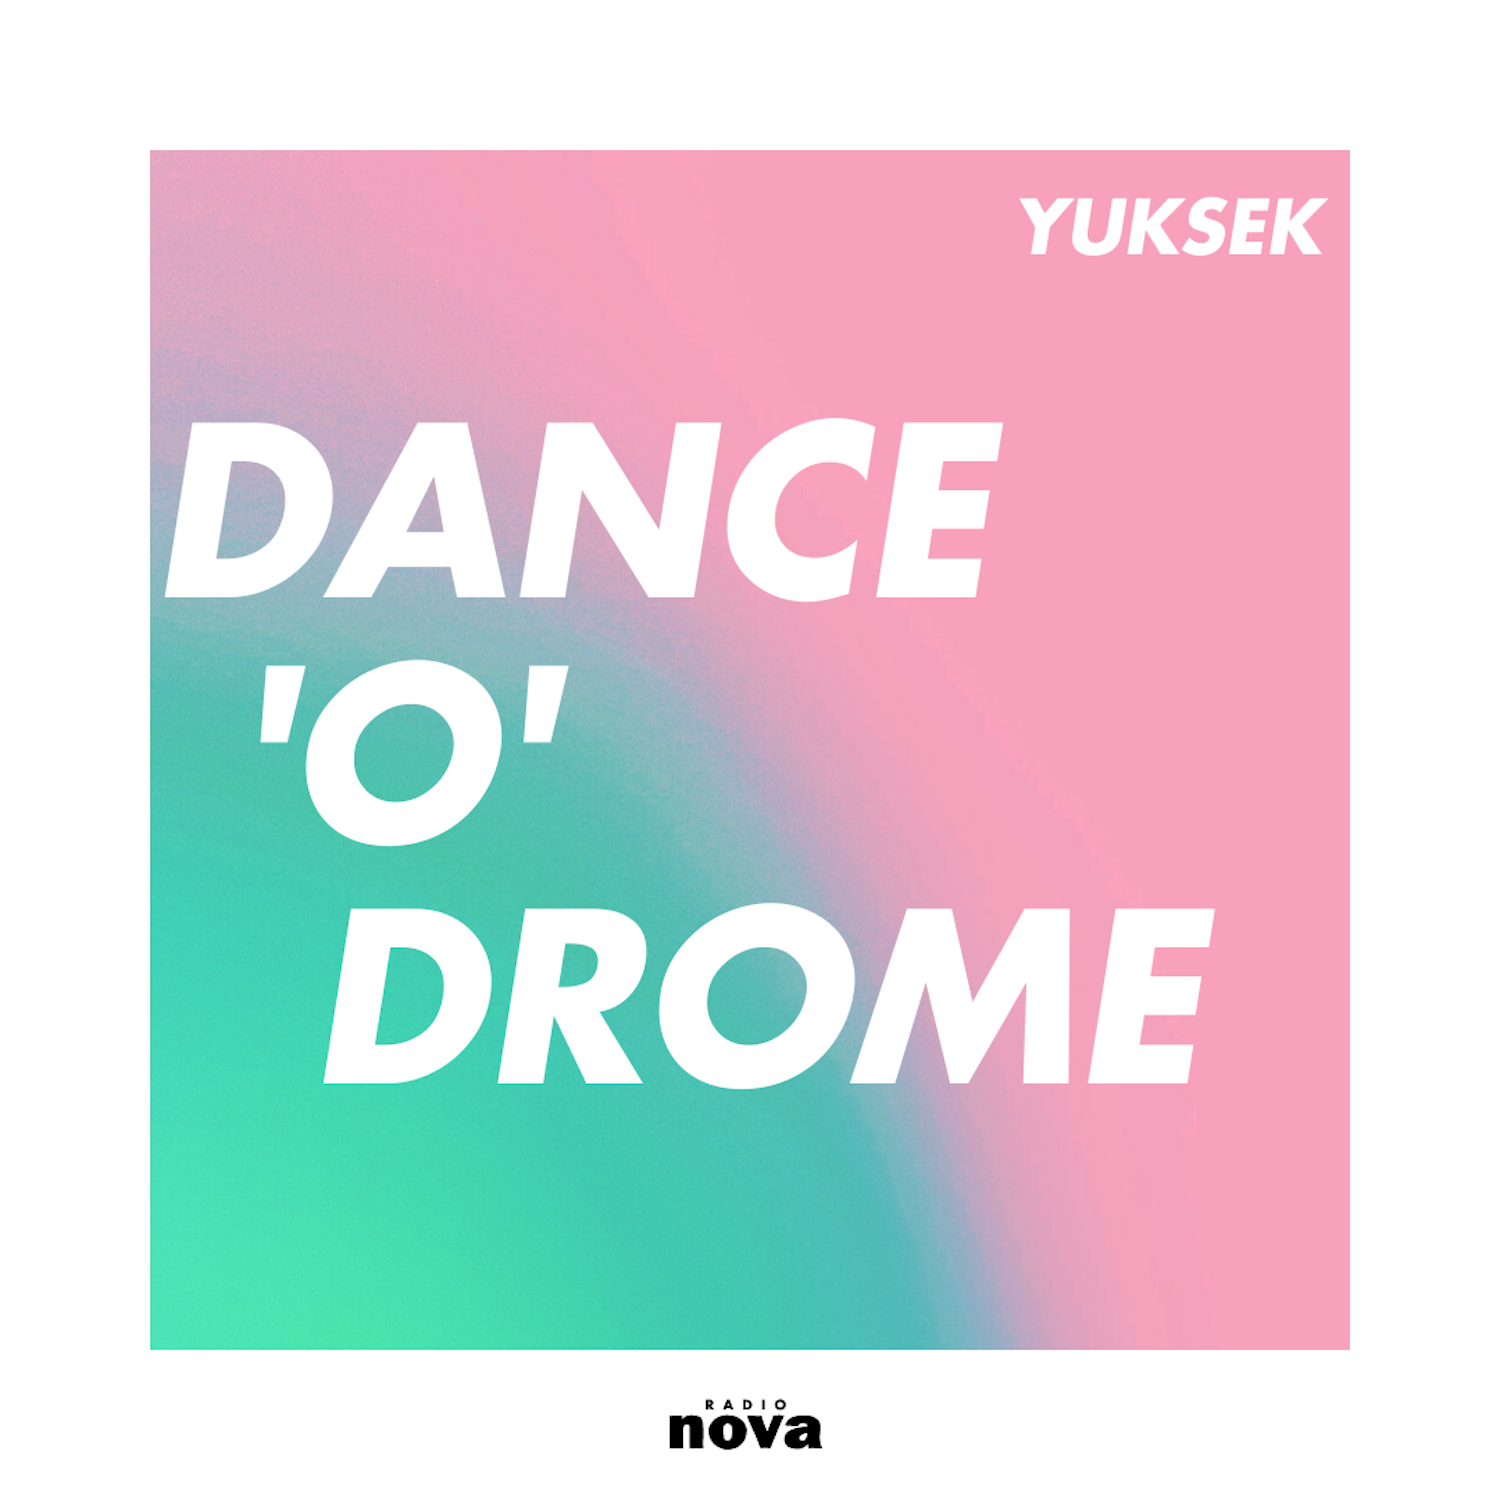 Dance’o’drome'